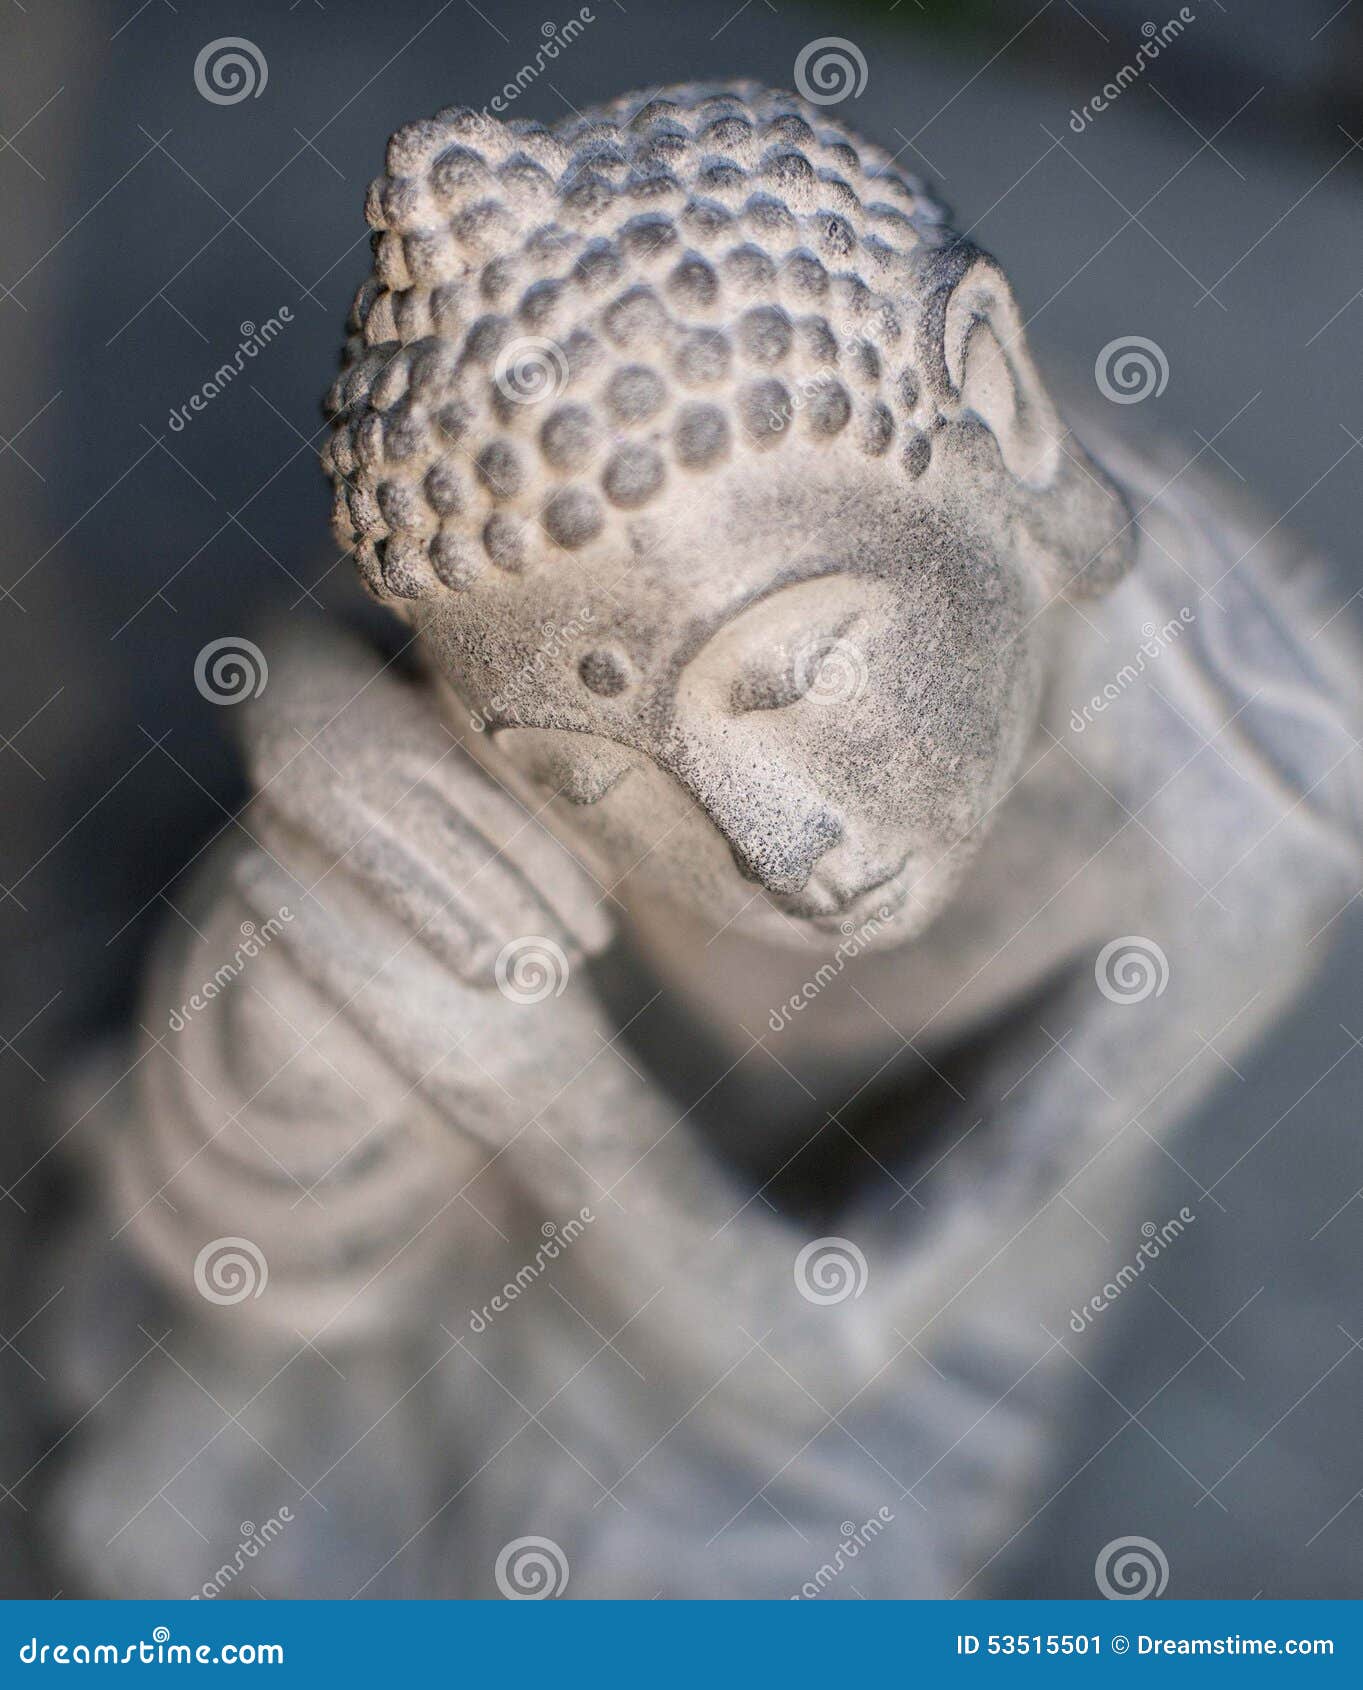 resting buddha